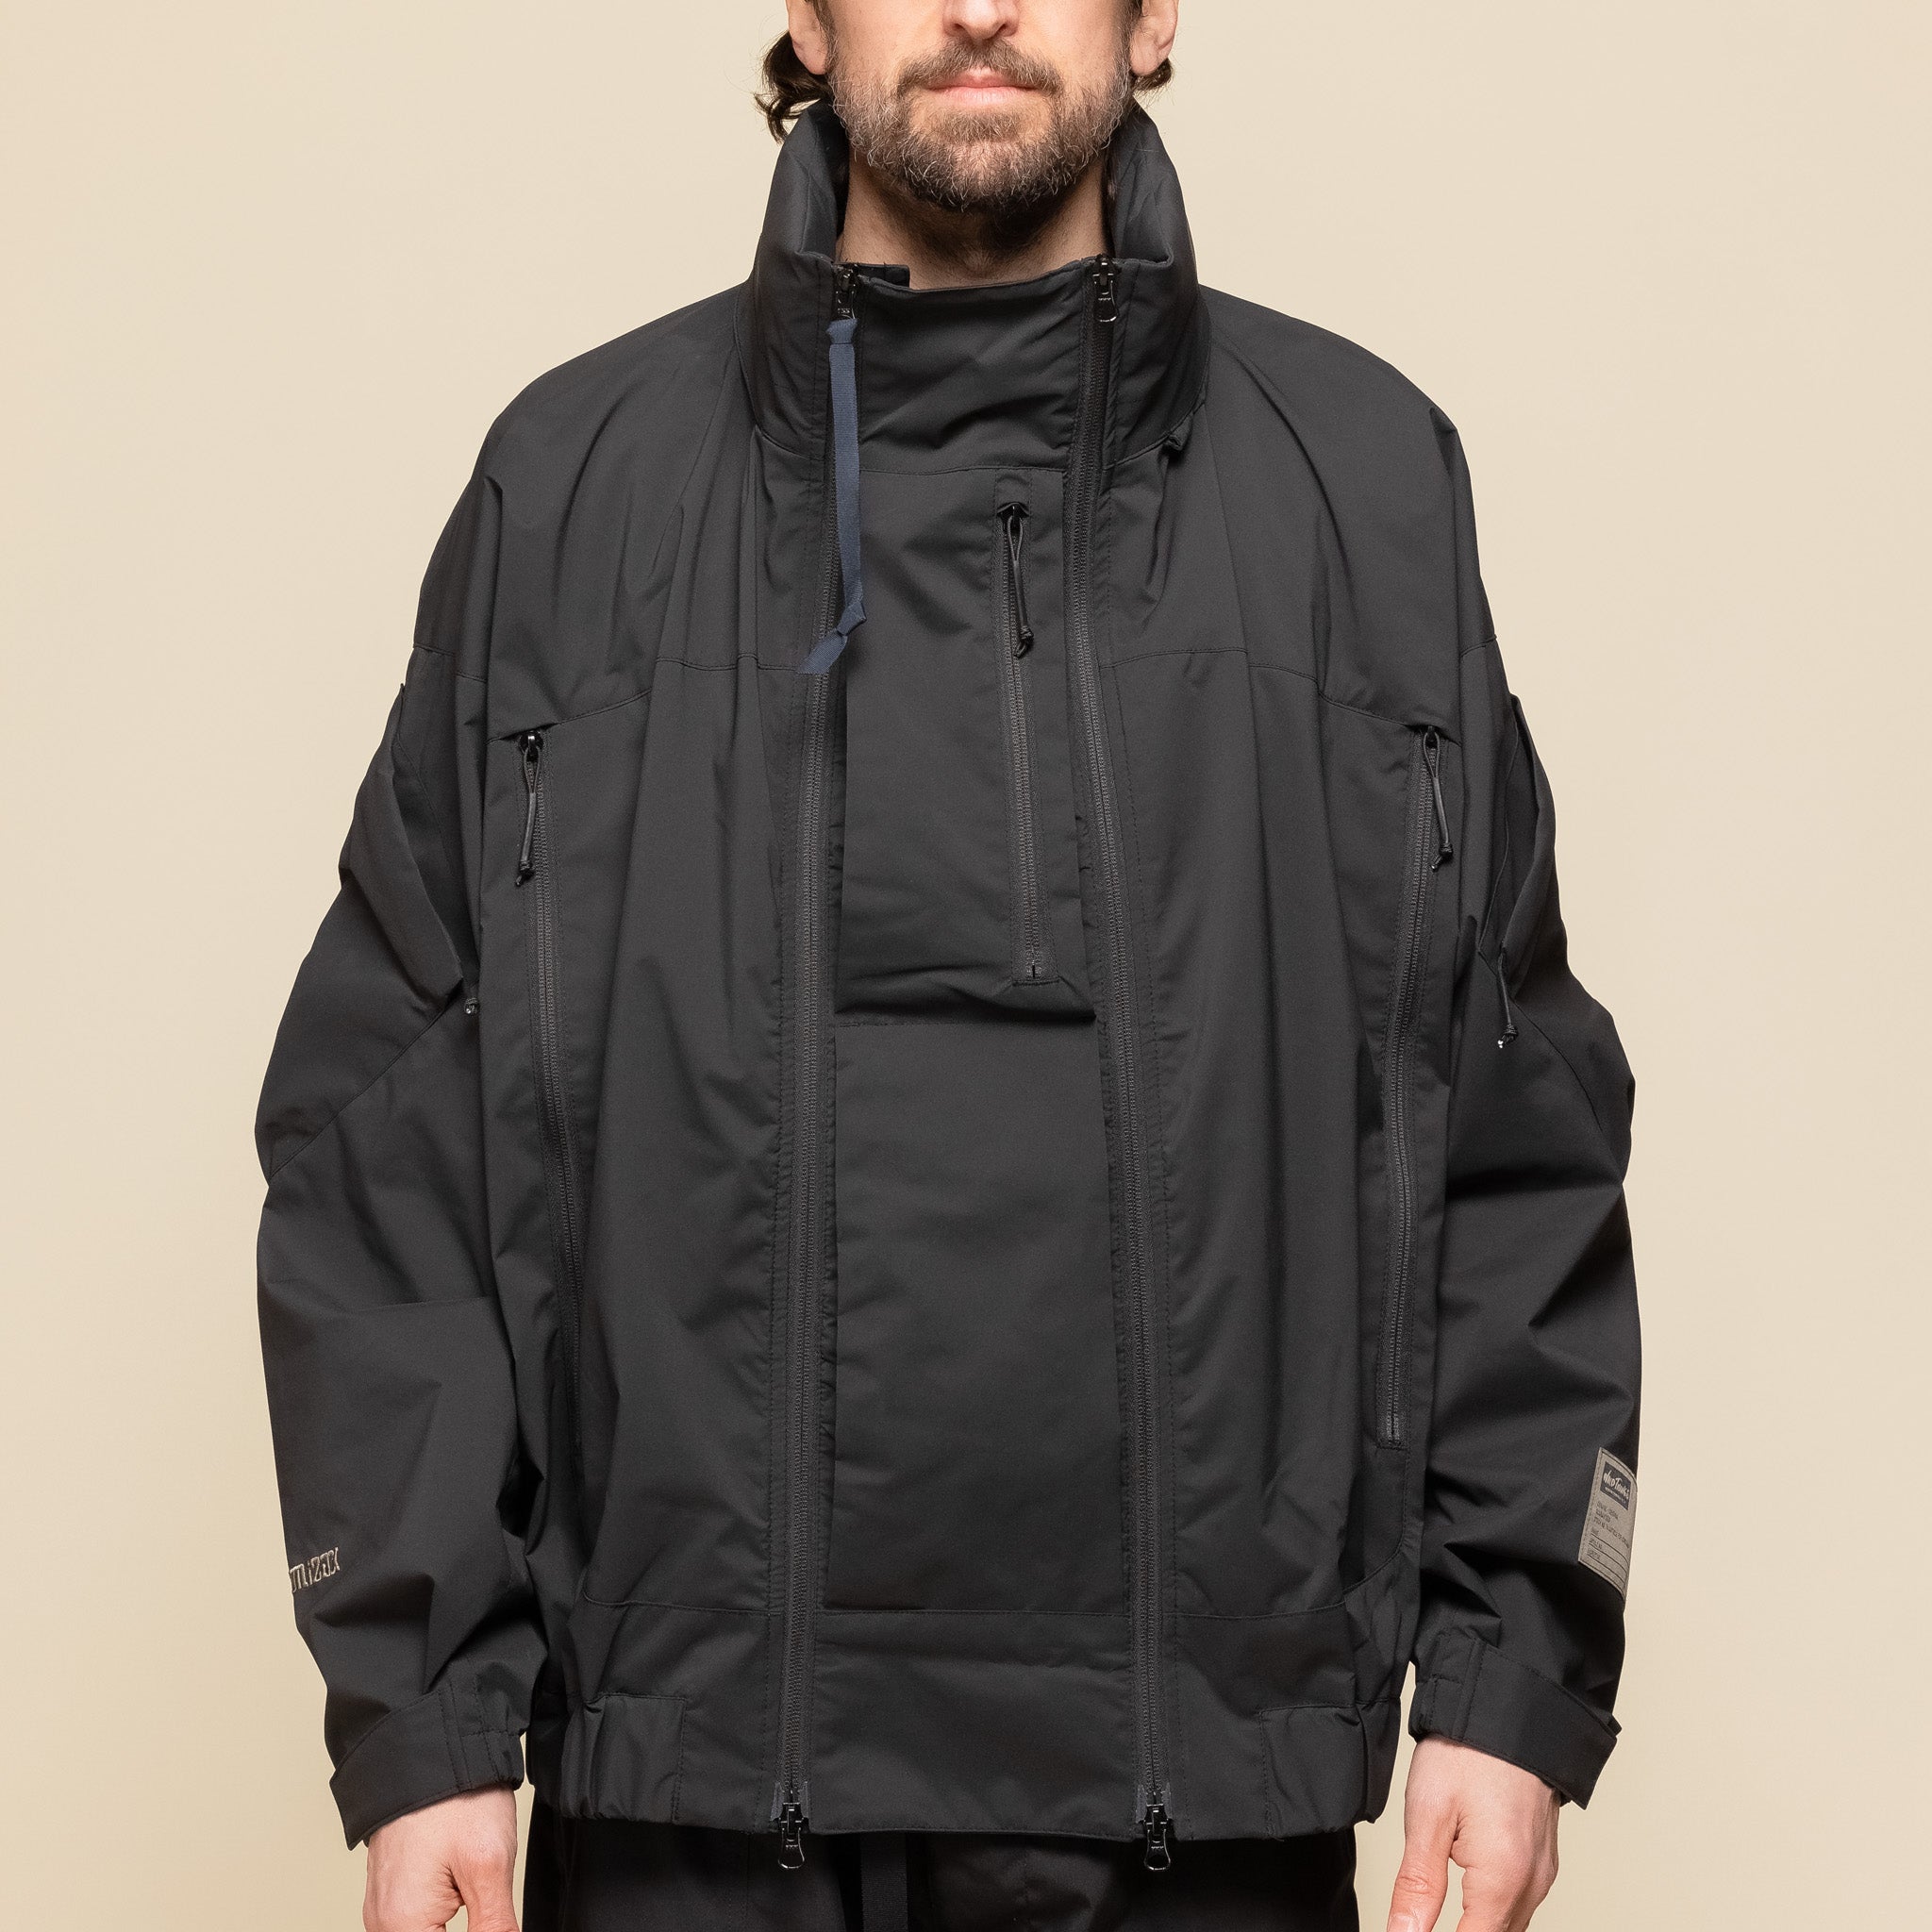 Poliquant - Protected Common Uniform Hooded Jacket - Black "poliquant stockists" "poliquant website" "poliquant jacket"